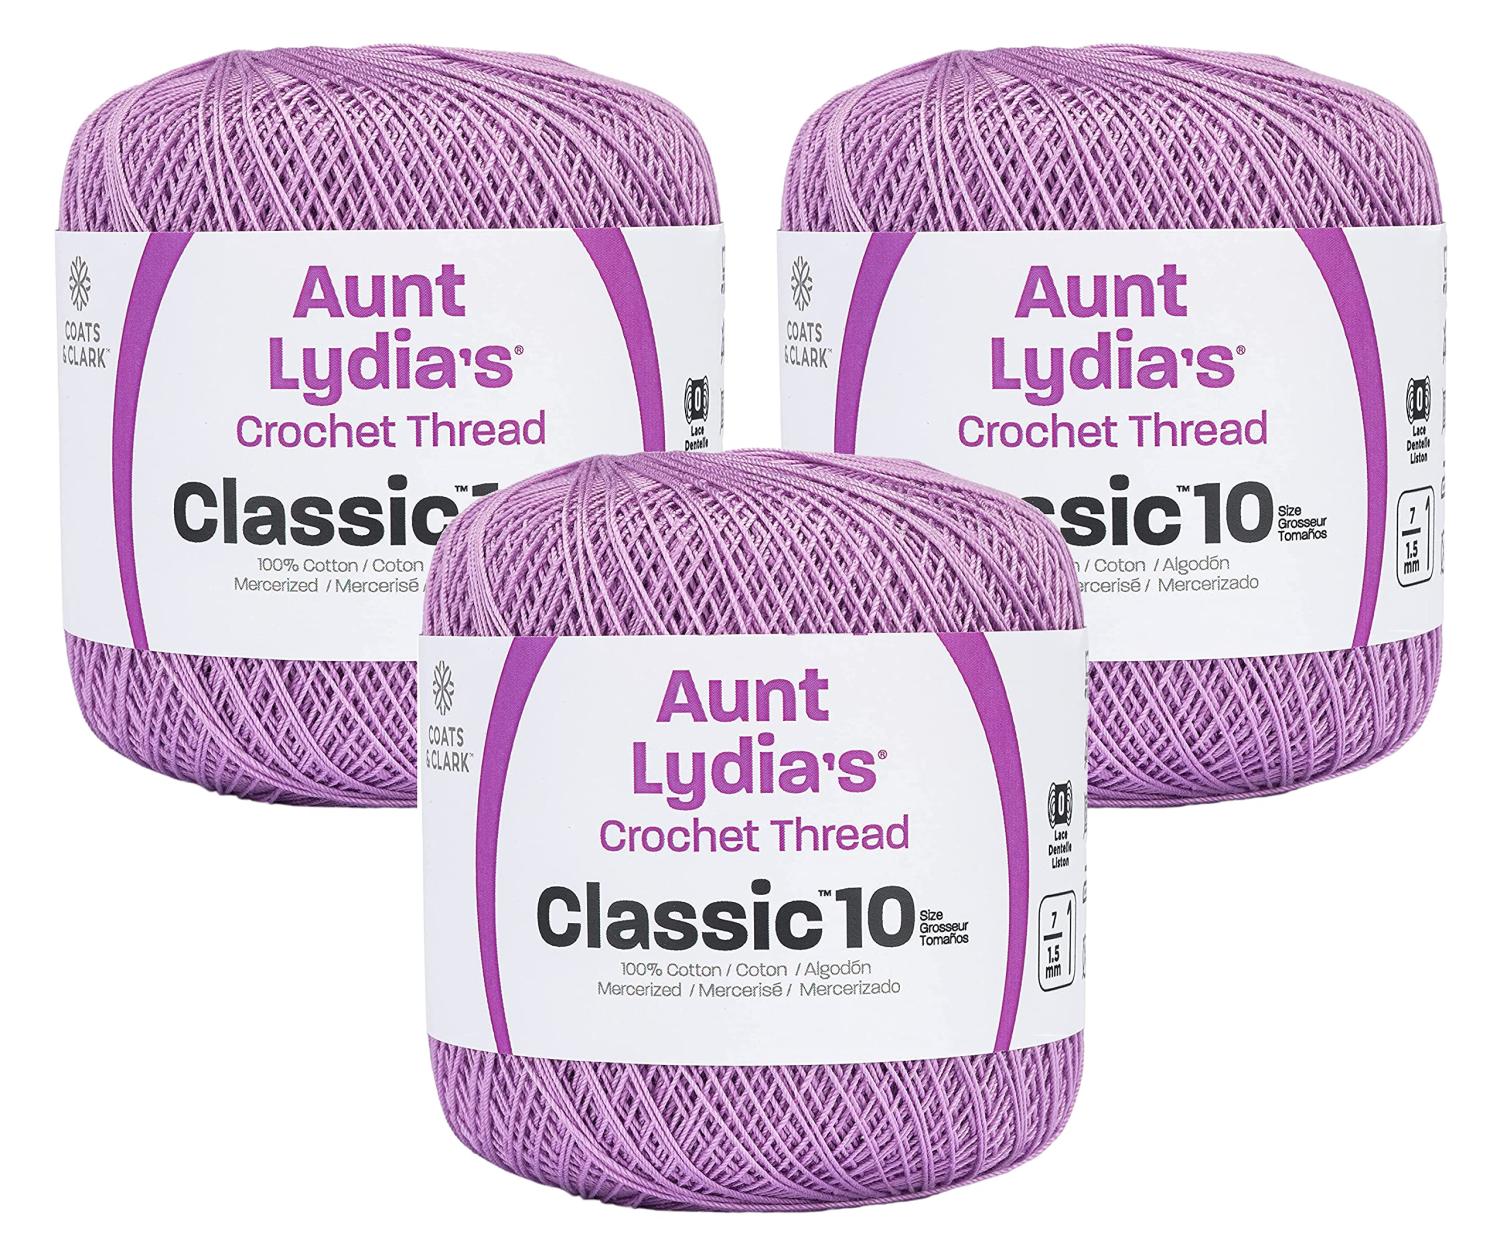 Crochet Thread, Aunt Lydia's Crochet Cotton Classic Size 10, Lace Yarn